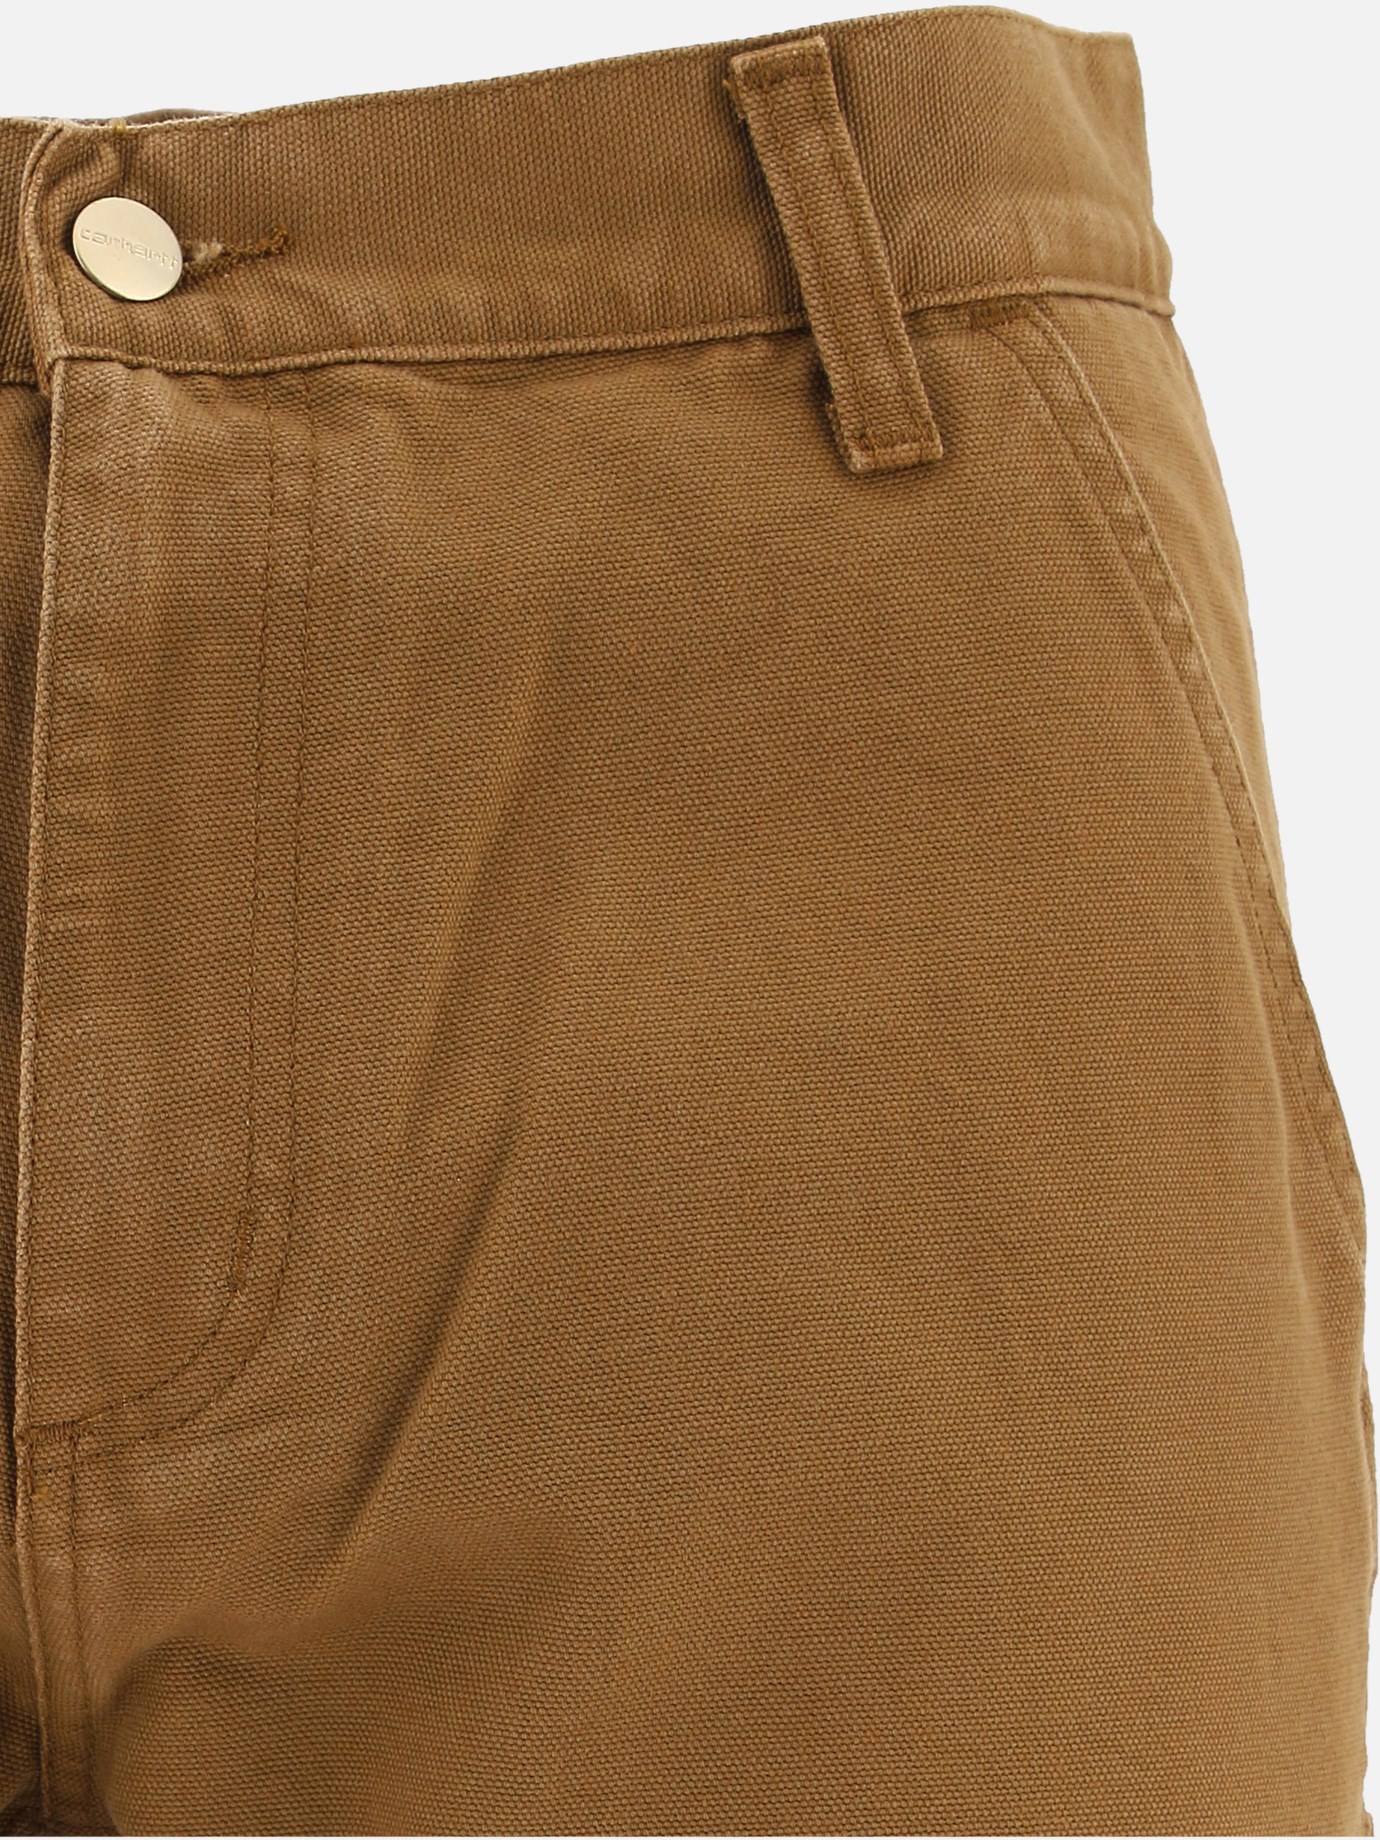 Pantaloni  Ruck Single Knee  by Carhartt WIP